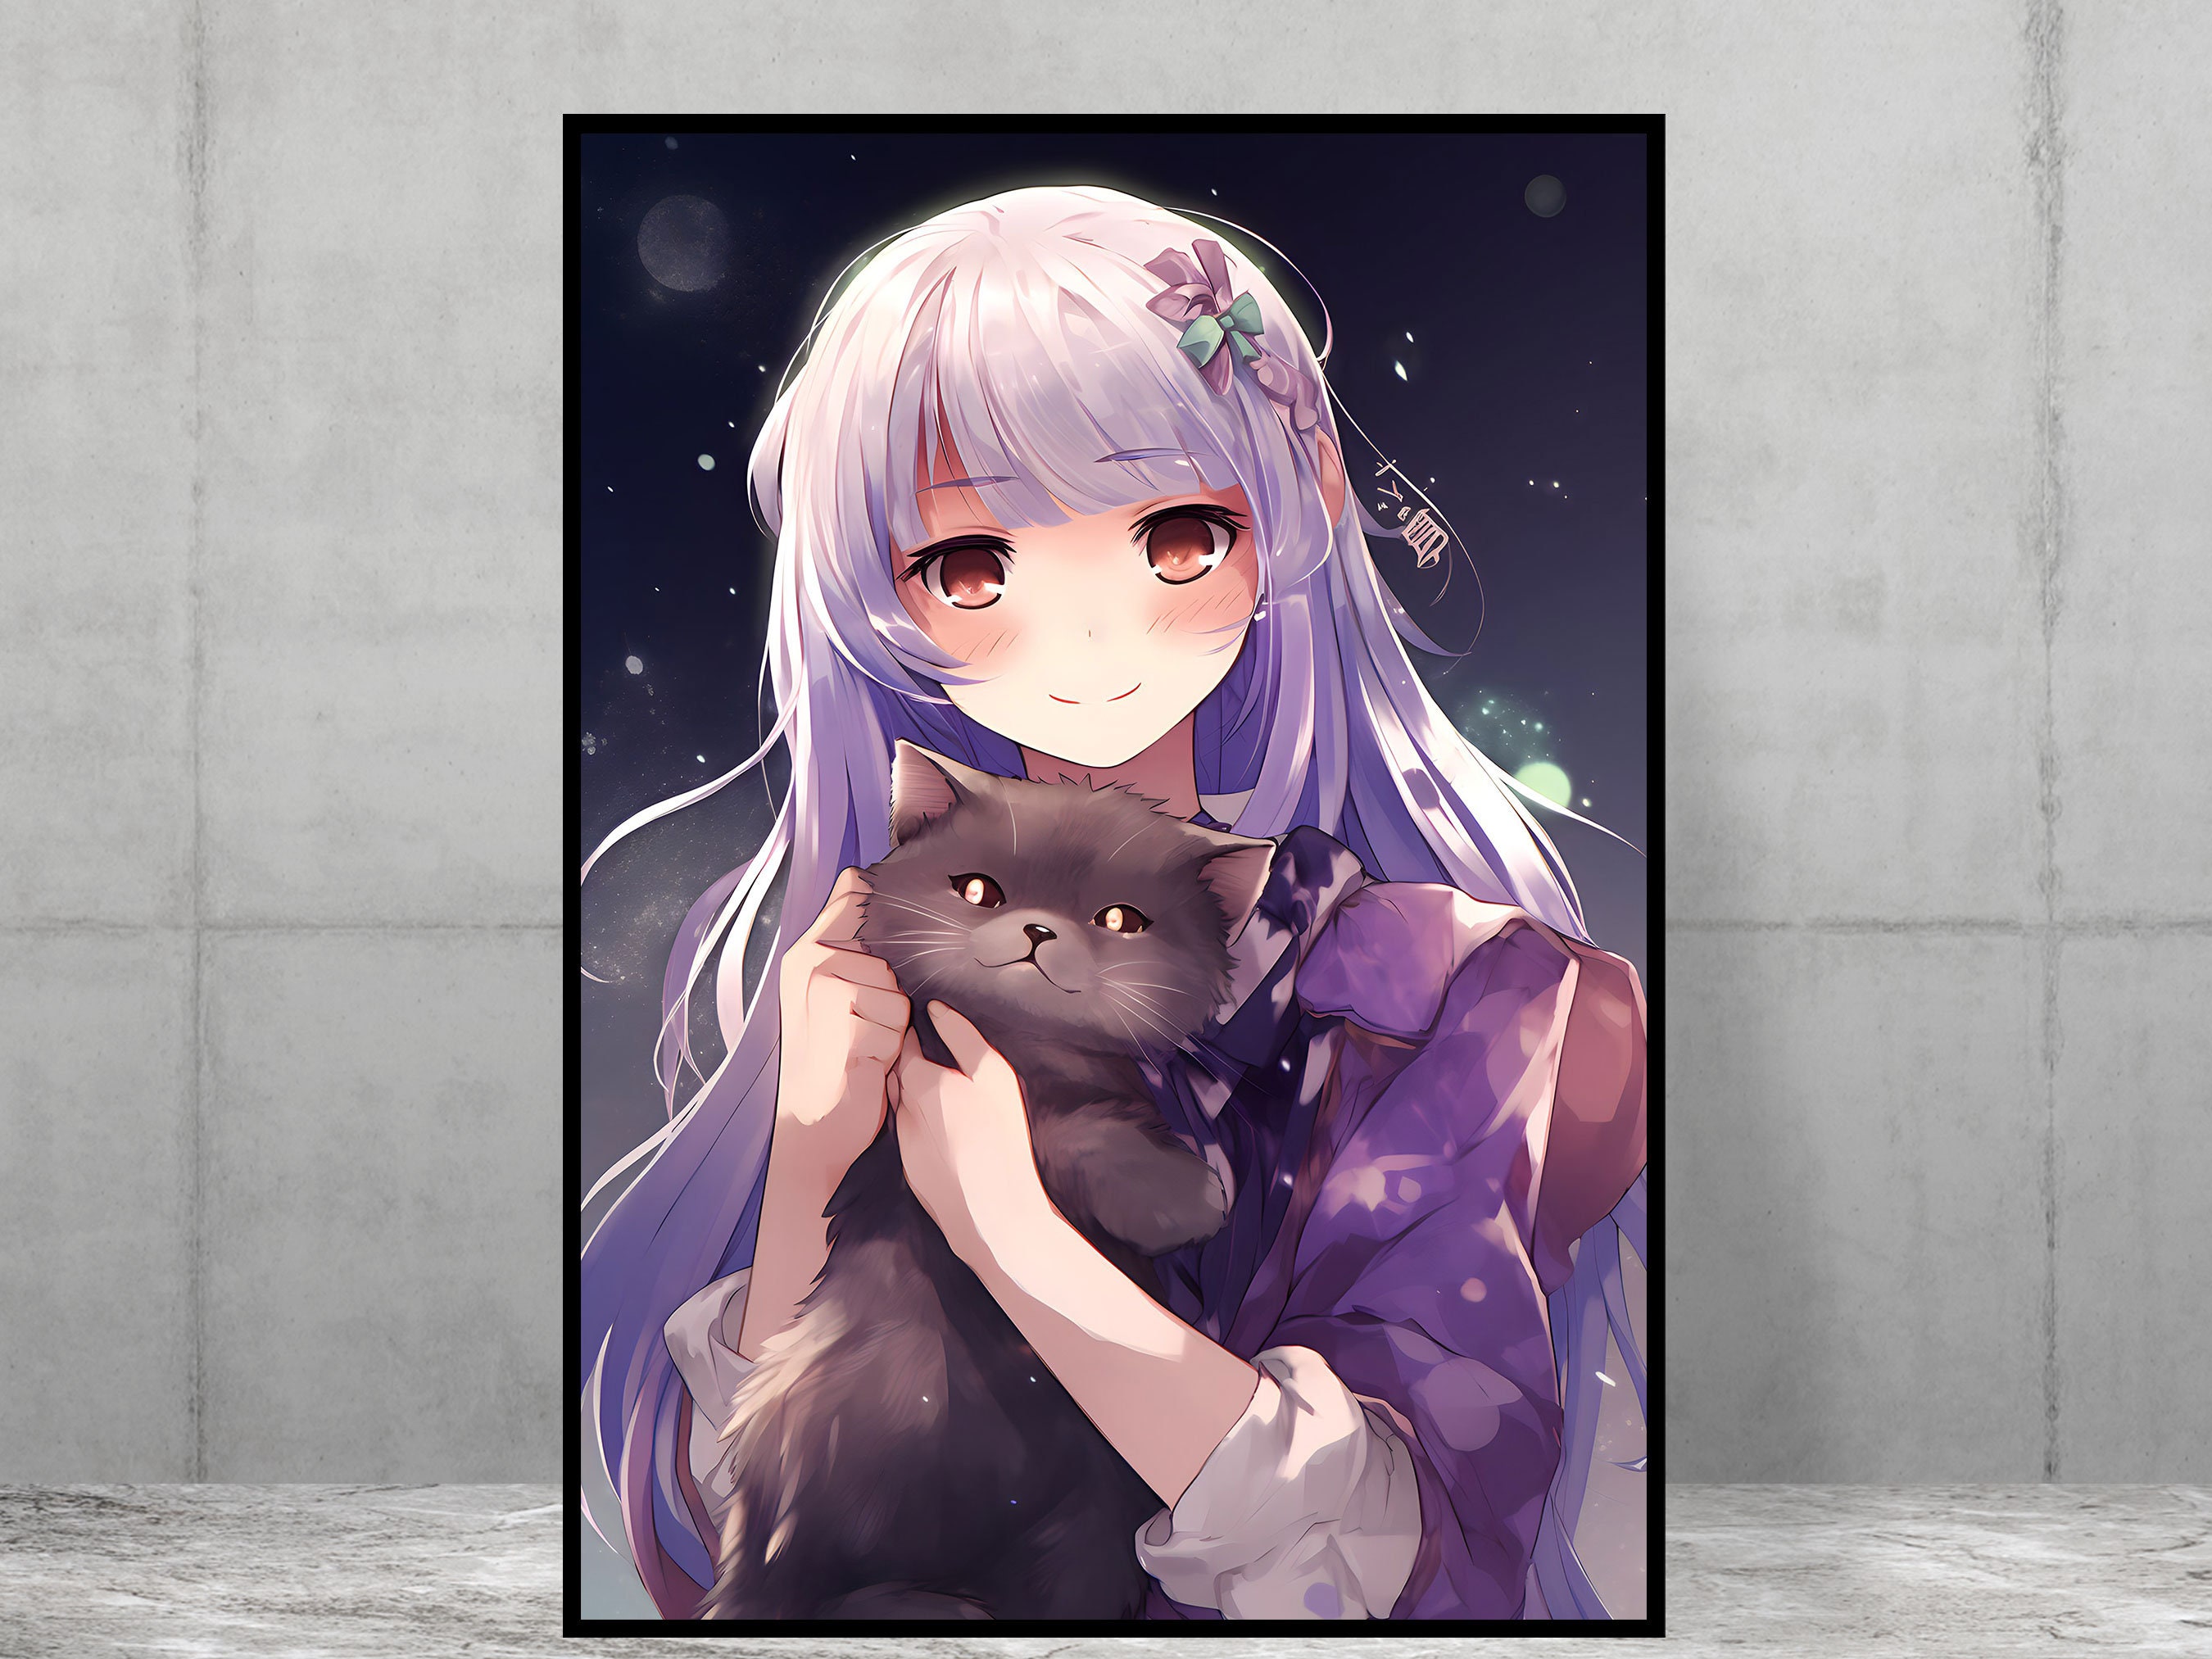 Kawaii Anime Neko Cat Girl in Black Hoodie Poster for Sale by